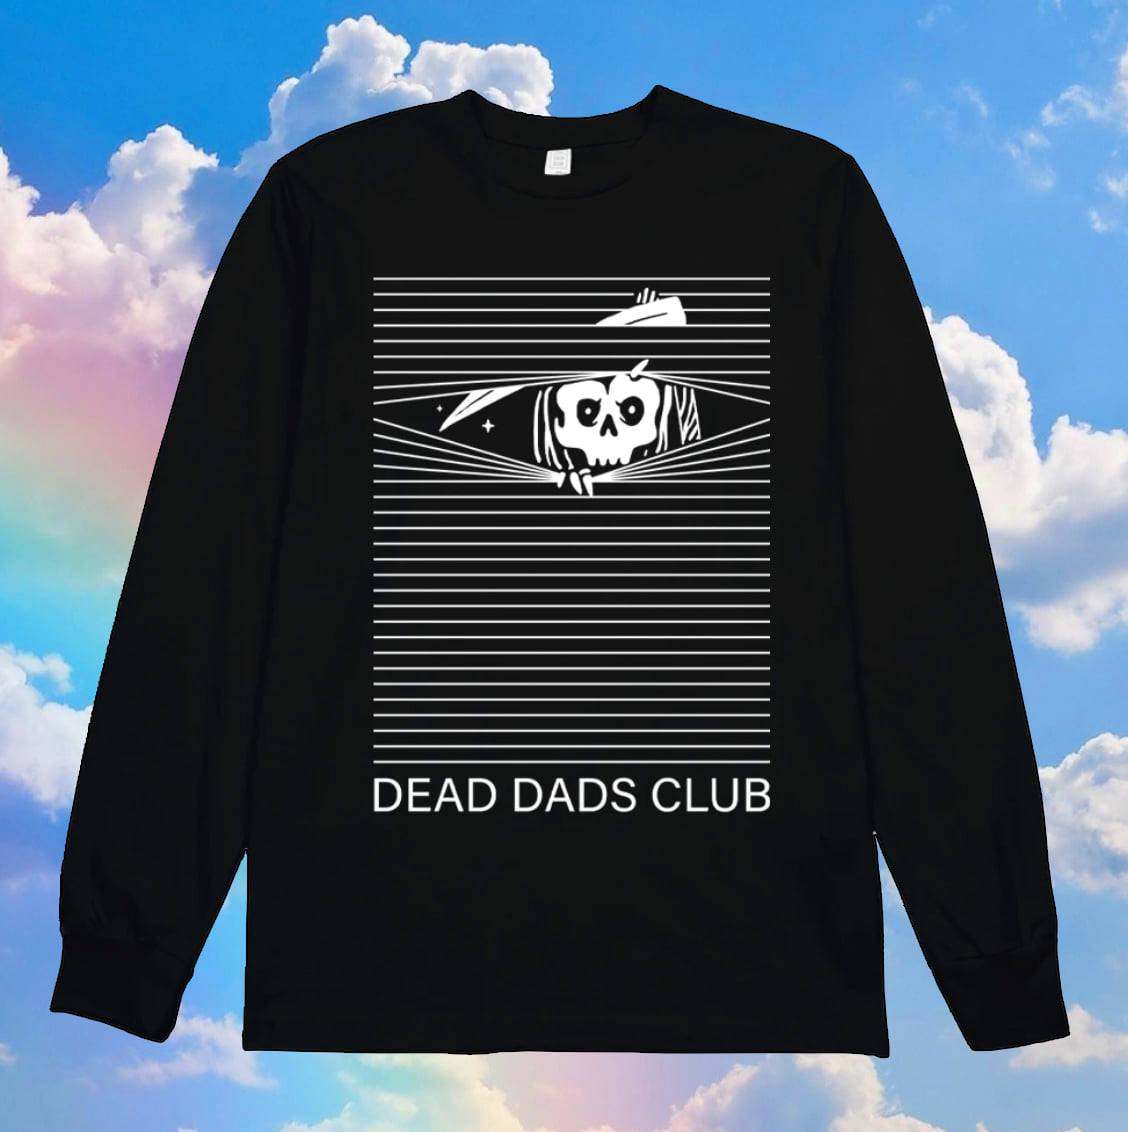 Dead dads club - Black evil, father in heaven